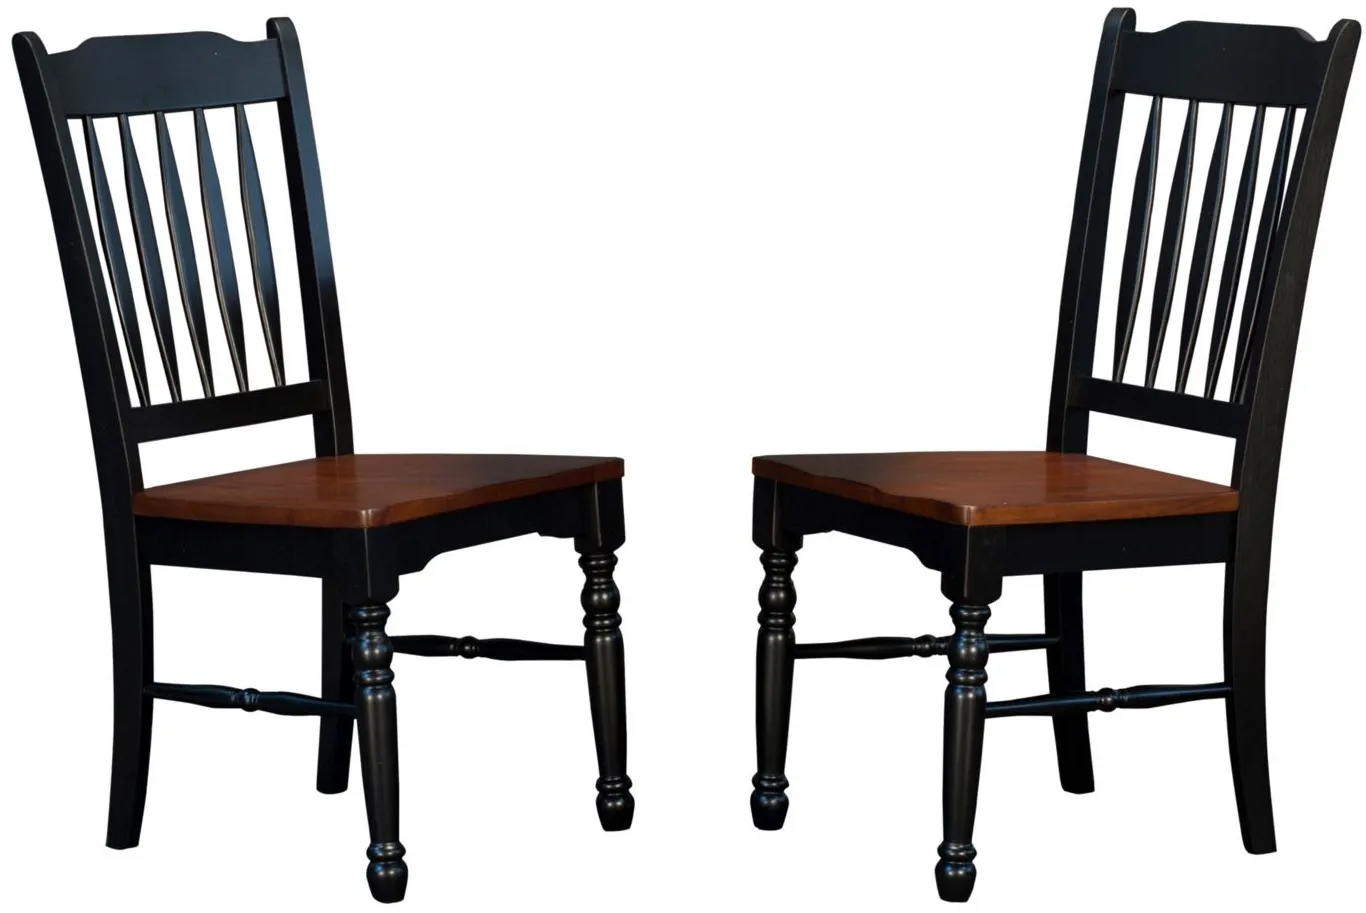 British Isles Slatback Dining Chair - Set of 2 in Oak-Black by A-America